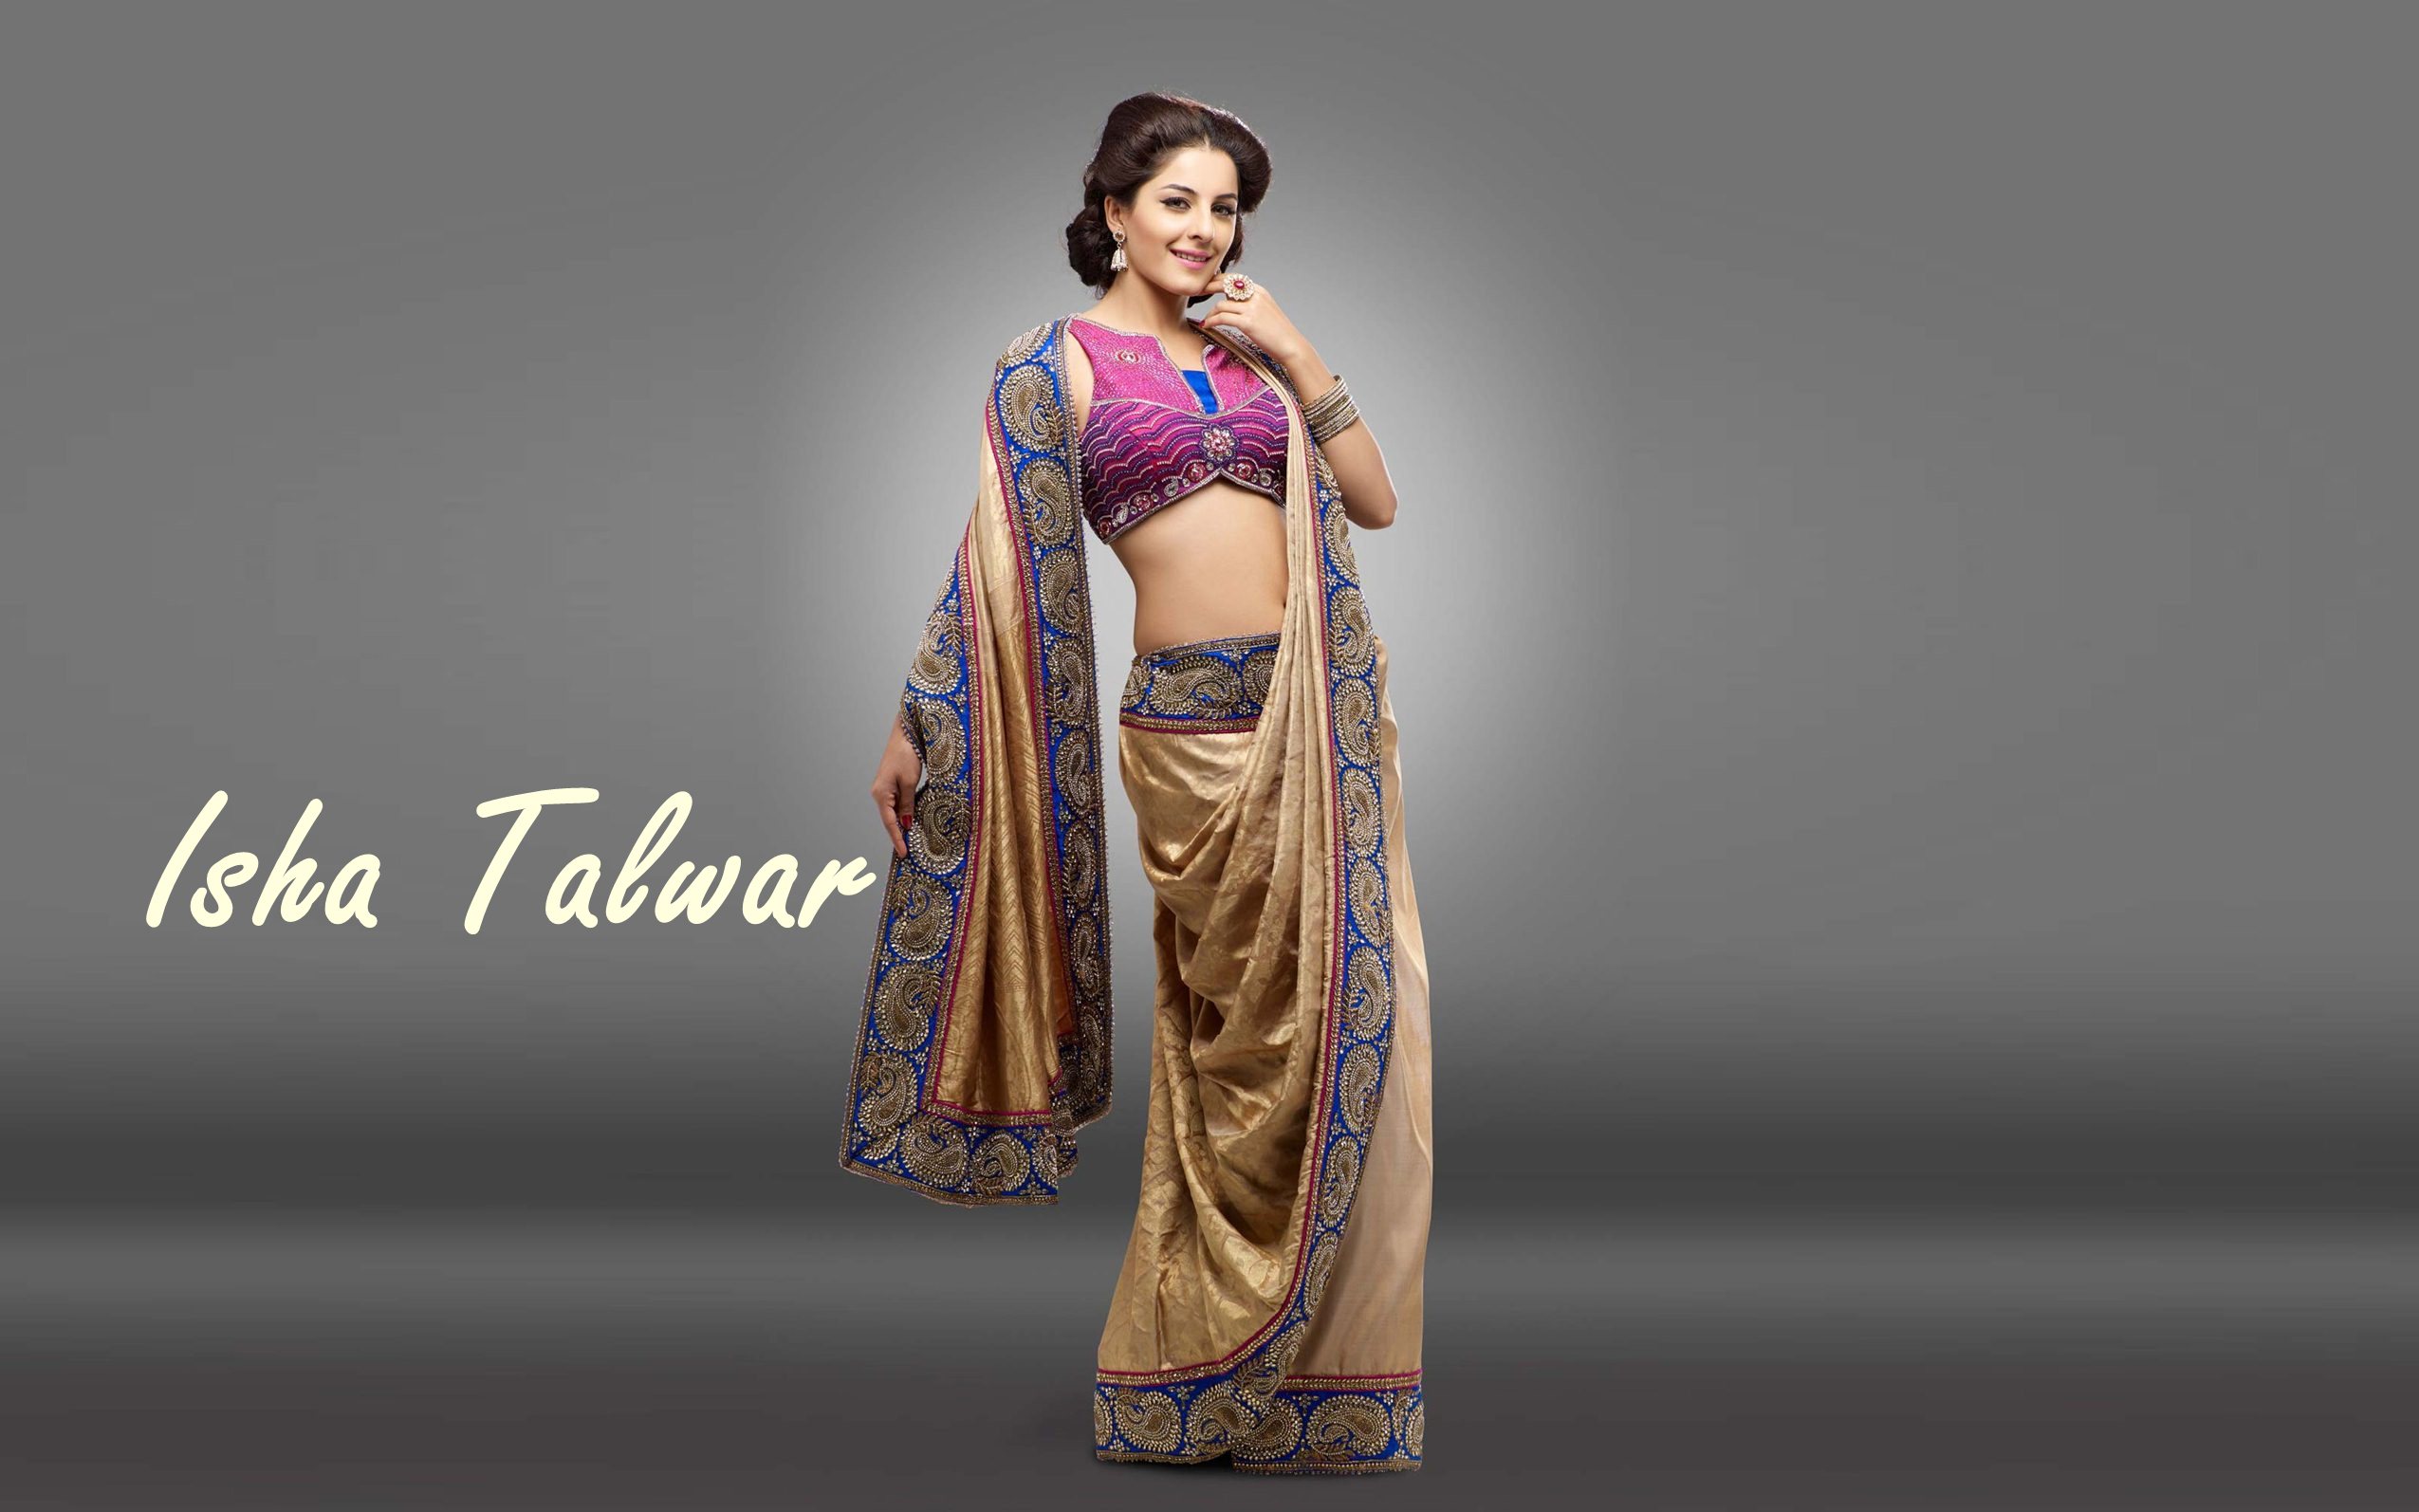 Talwar Wallpaper Hd - Isha Talwar Hot Saree , HD Wallpaper & Backgrounds